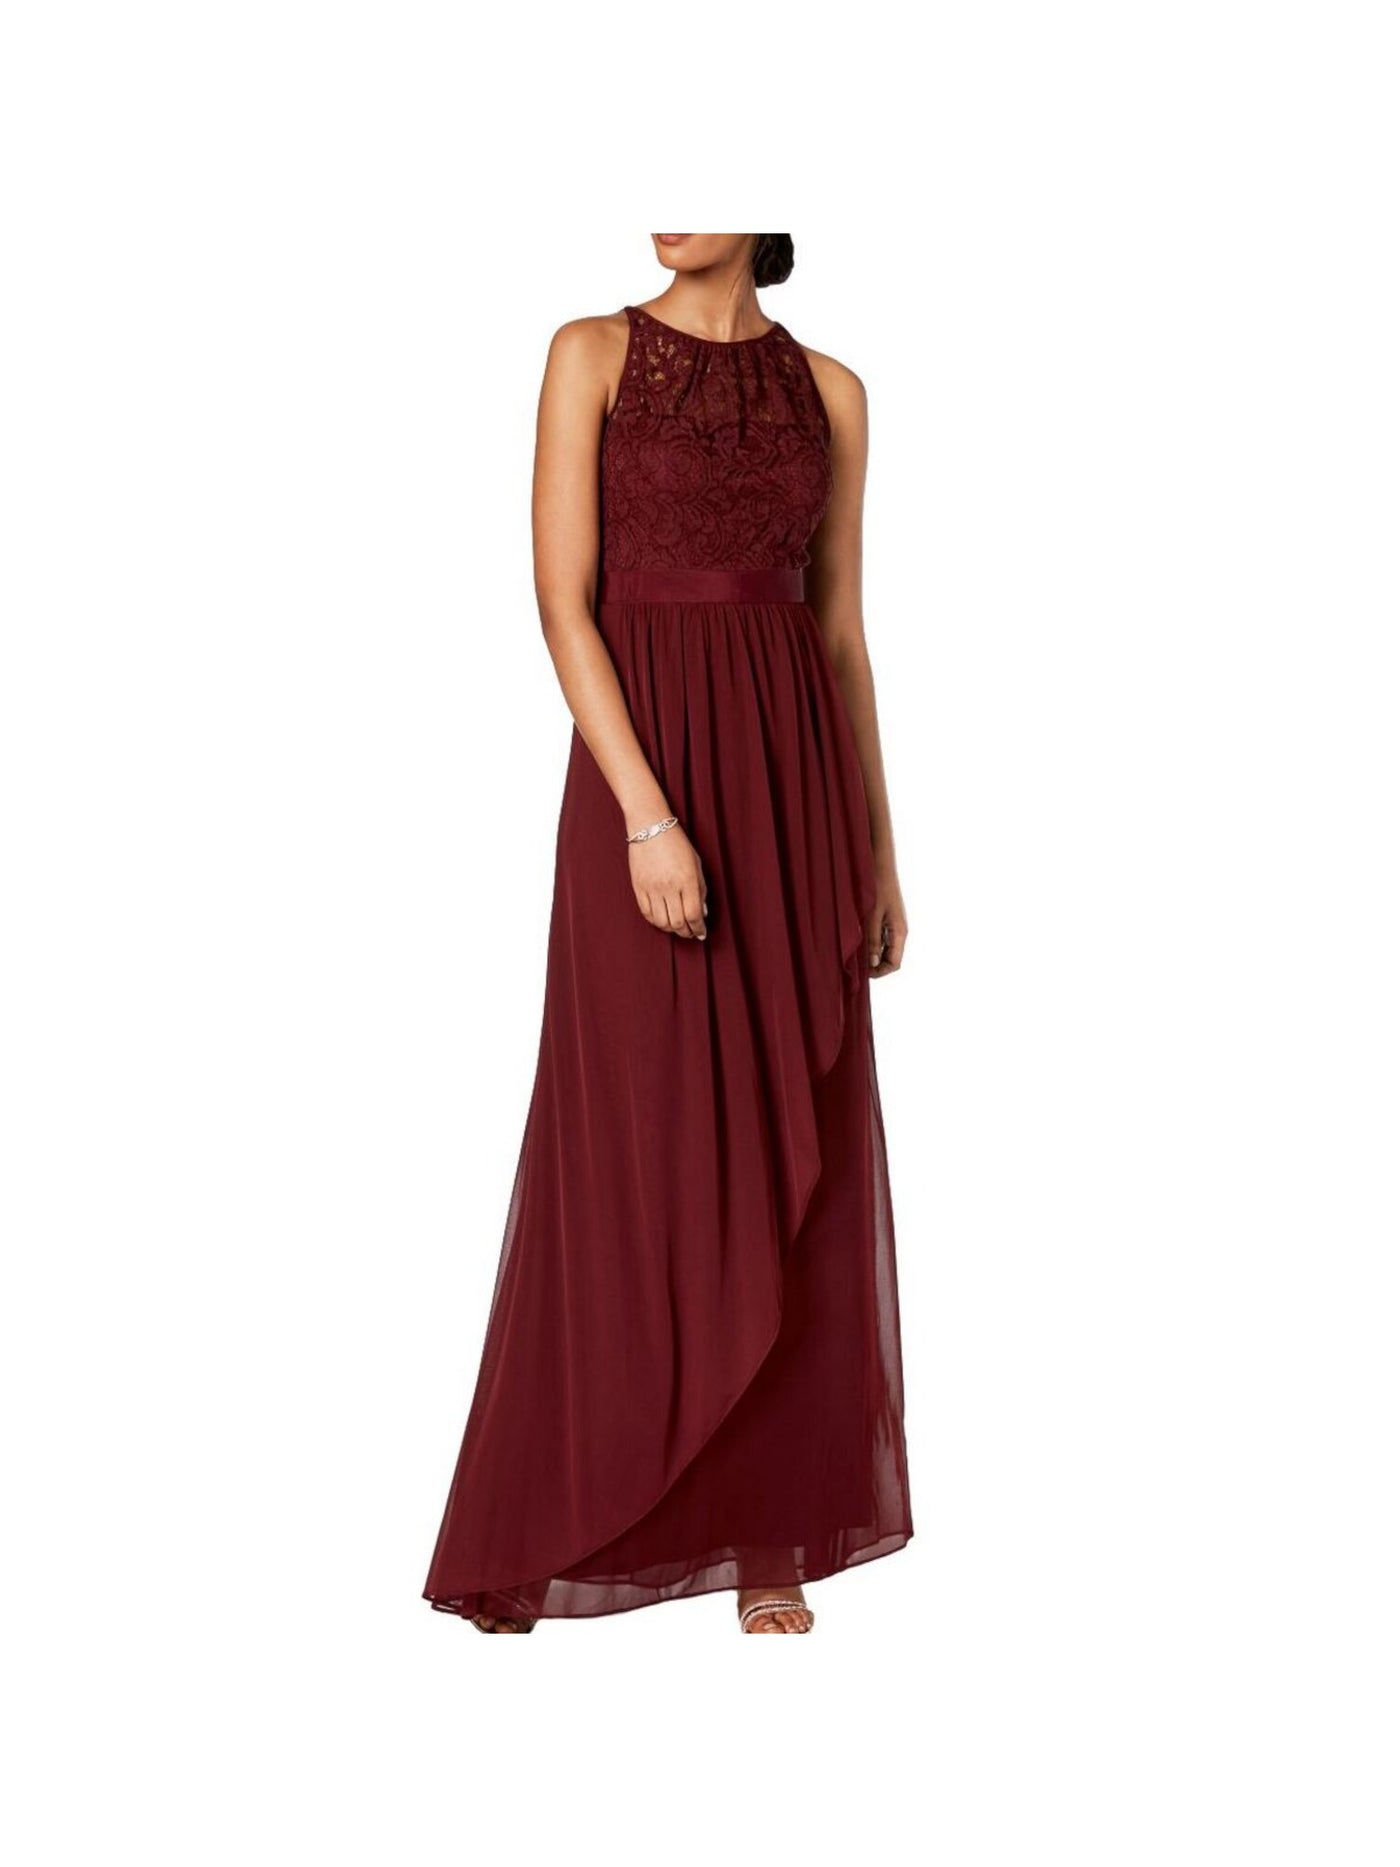 ADRIANNA PAPELL Womens Maroon Lace Zippered Sleeveless Illusion Neckline Full-Length Formal Layered Dress 8